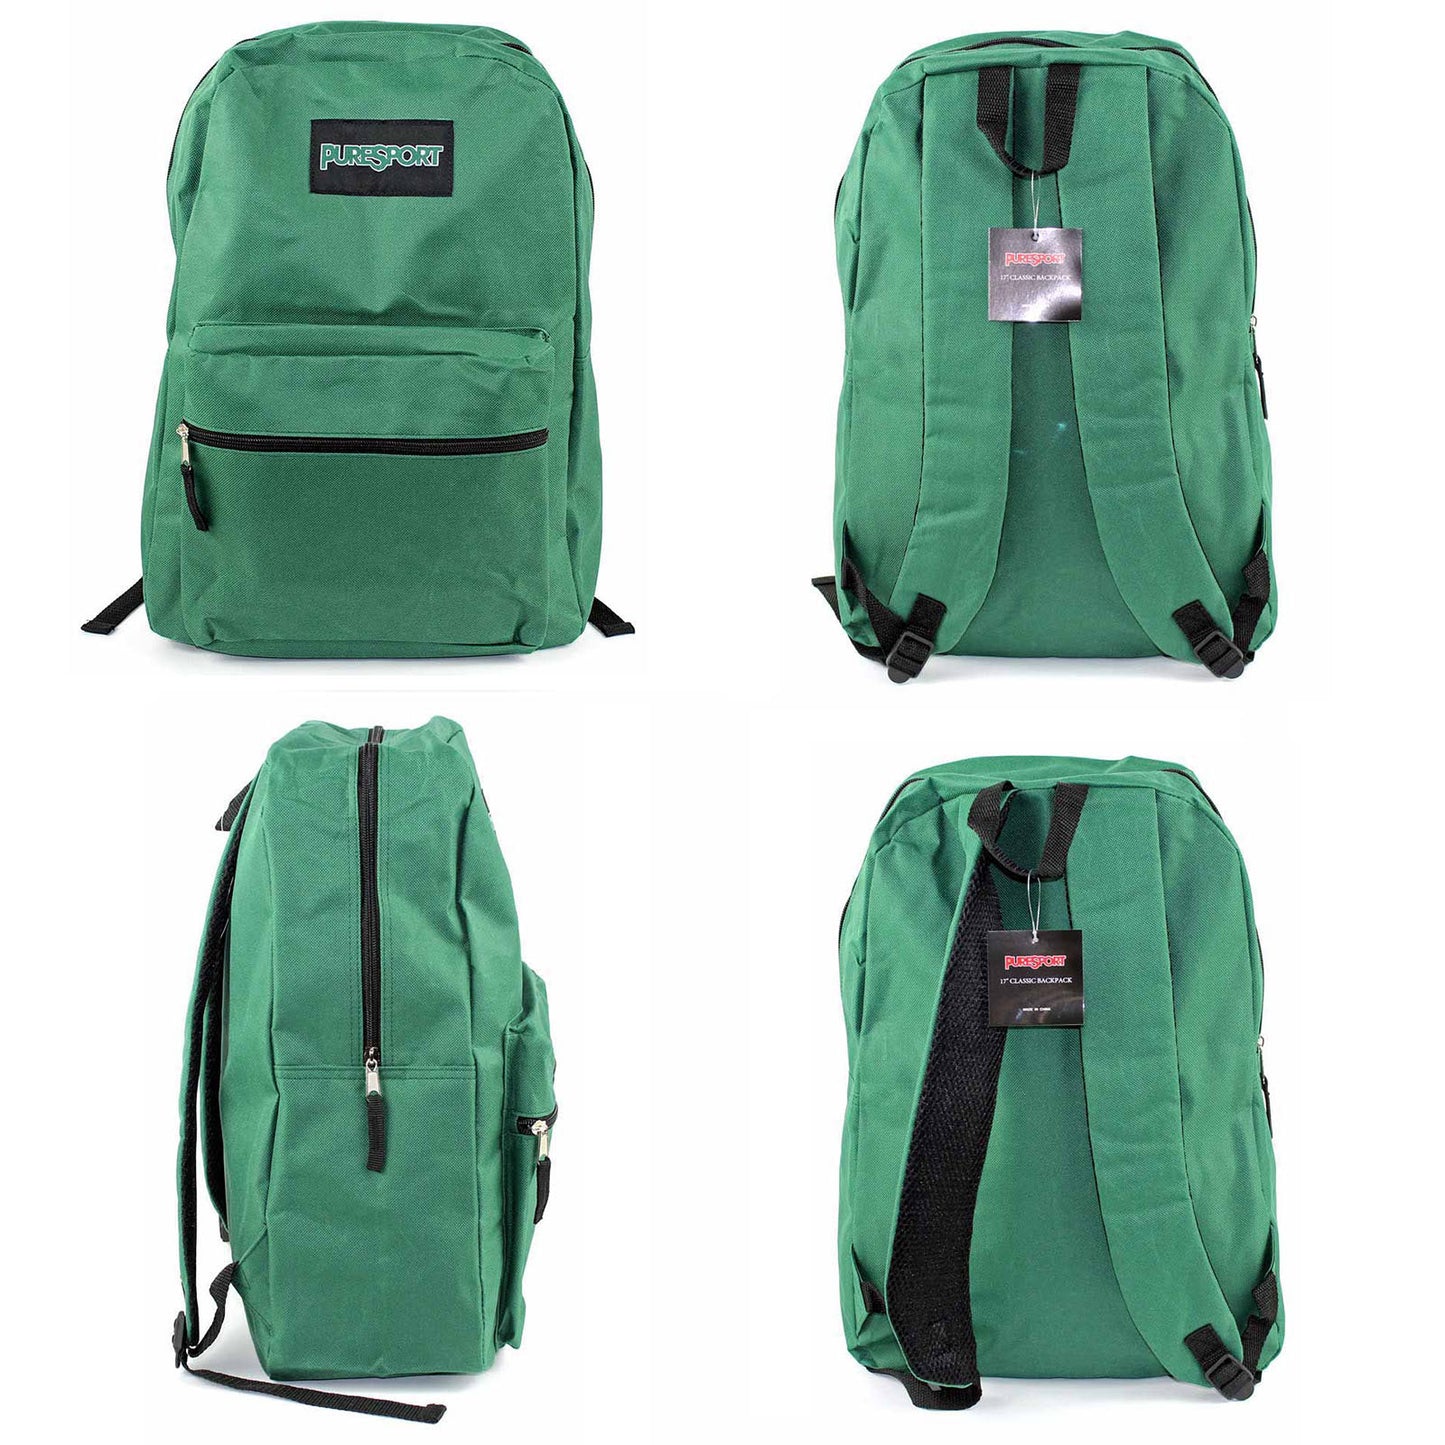 bulk wholesale backpacks in green 17 inch bookbags for back to school